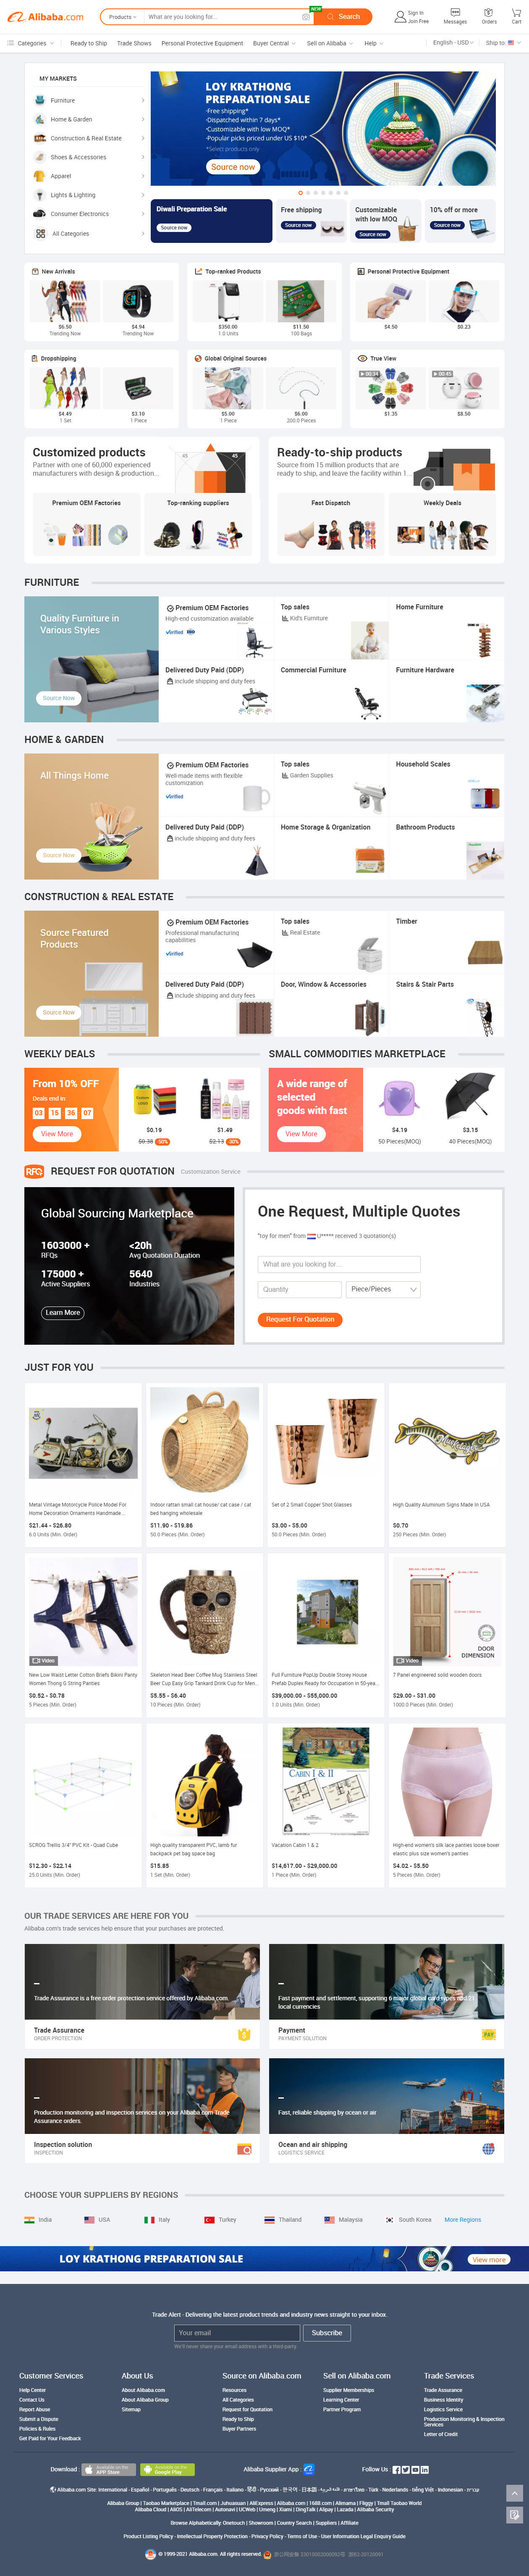 Alibaba website in 2021